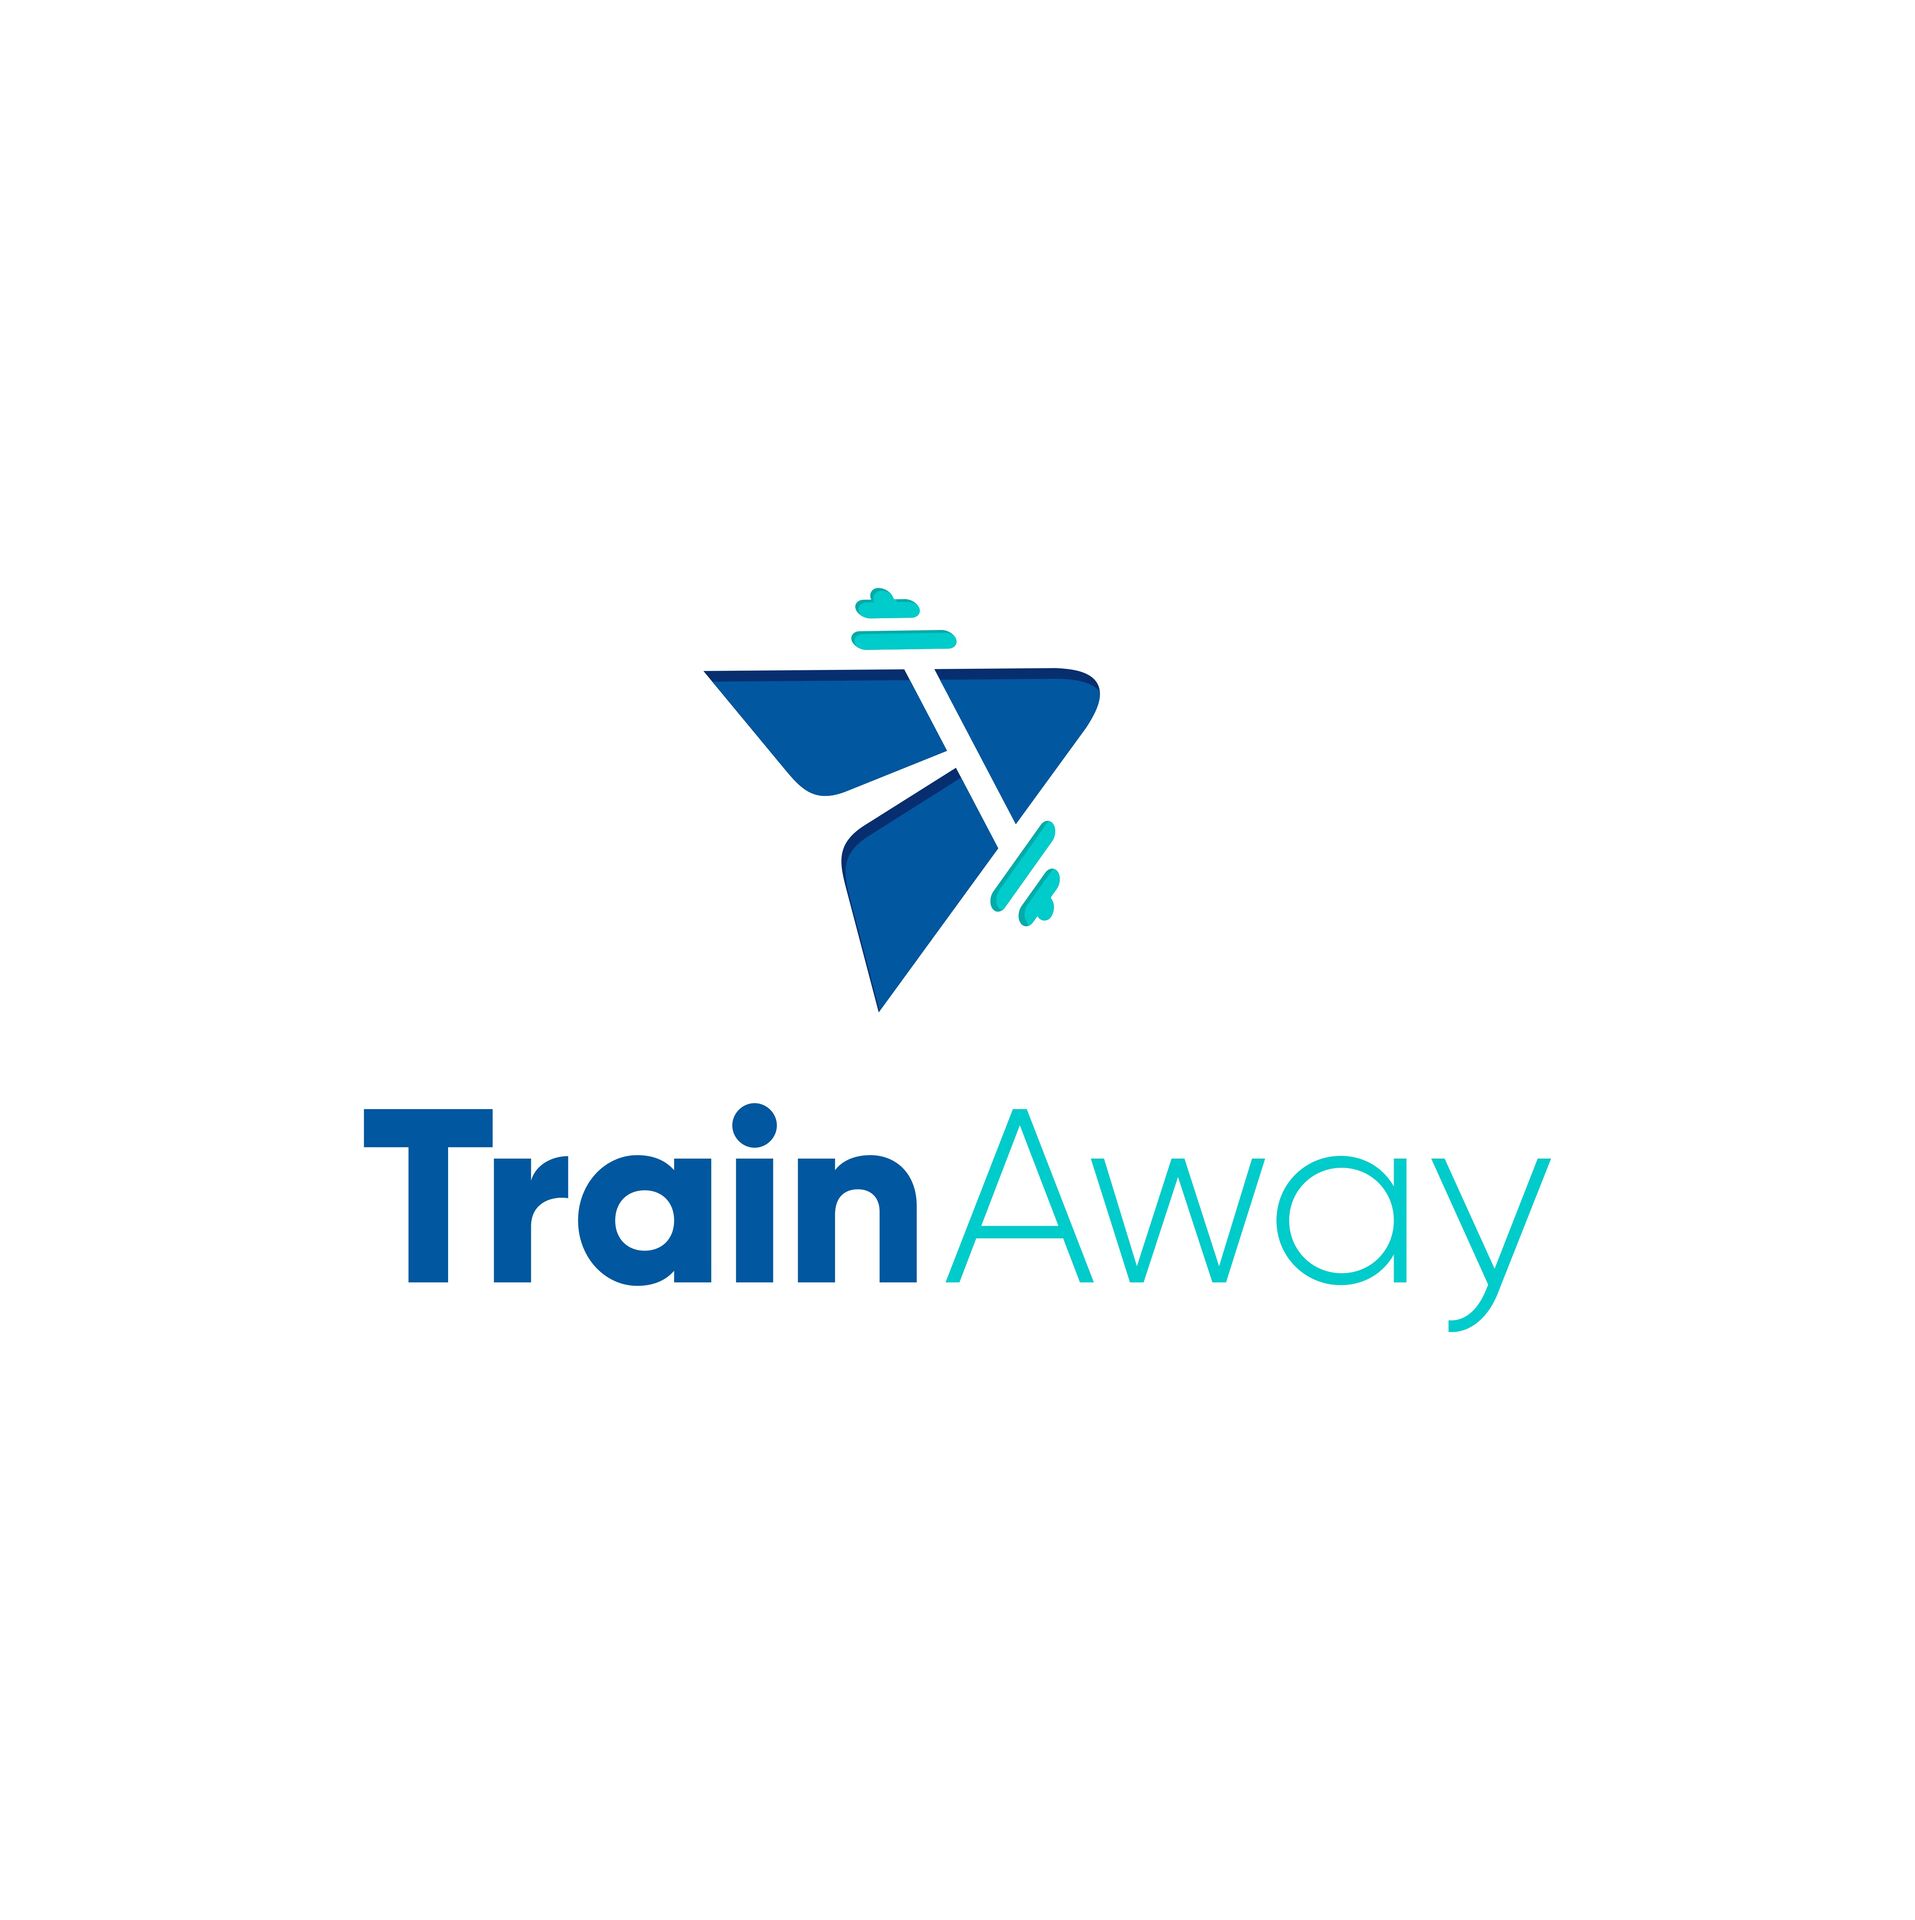 TrainAway logo white